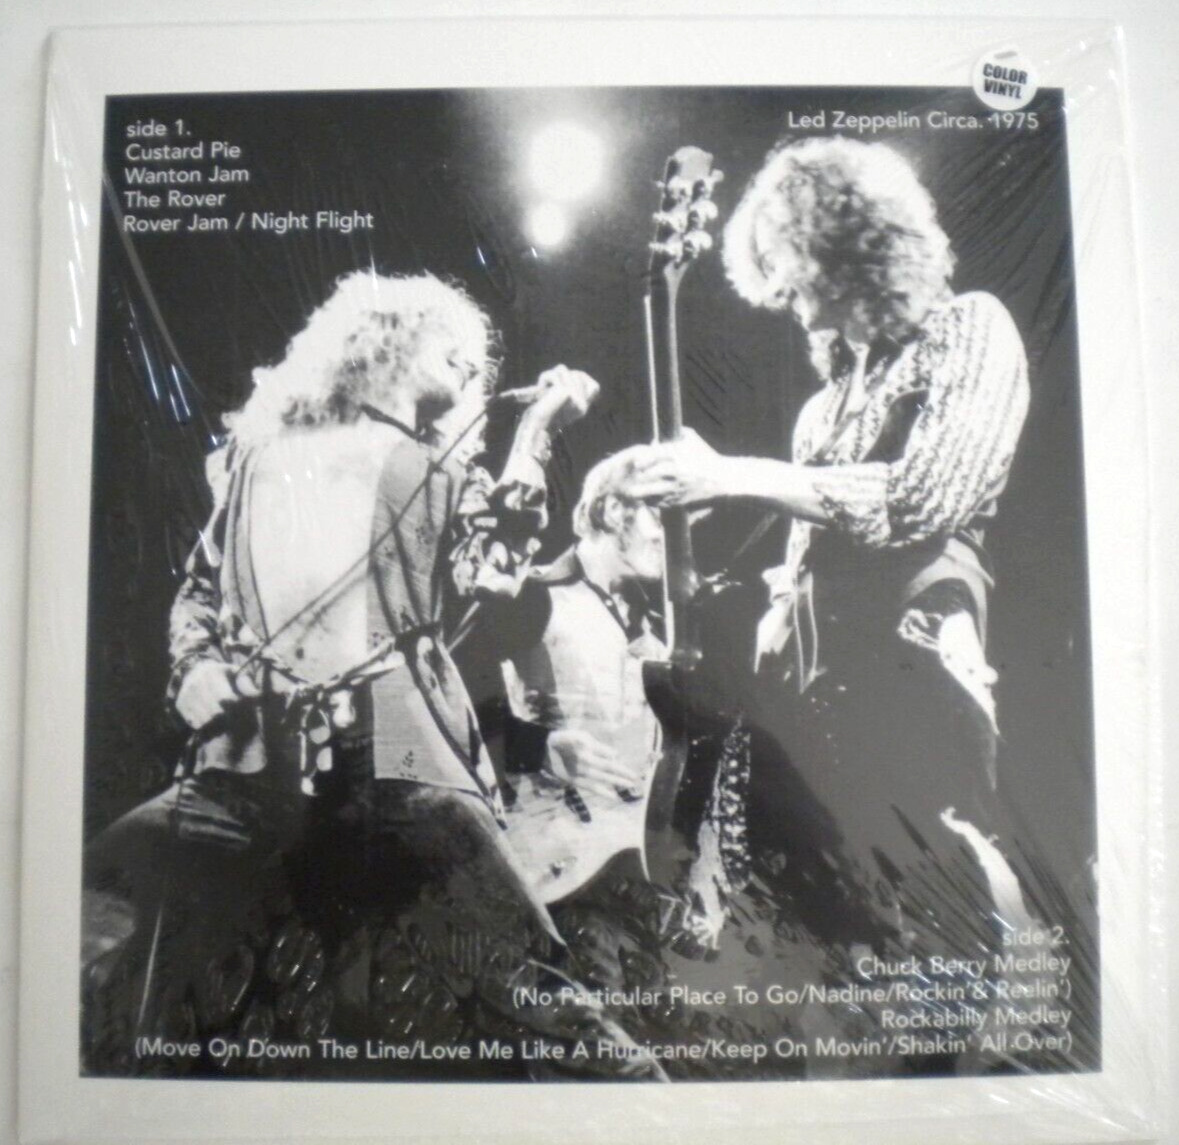 LED ZEPPELIN Circa 1975 LP Color Vinyl NEW Still Sealed Excellent Soundcheck